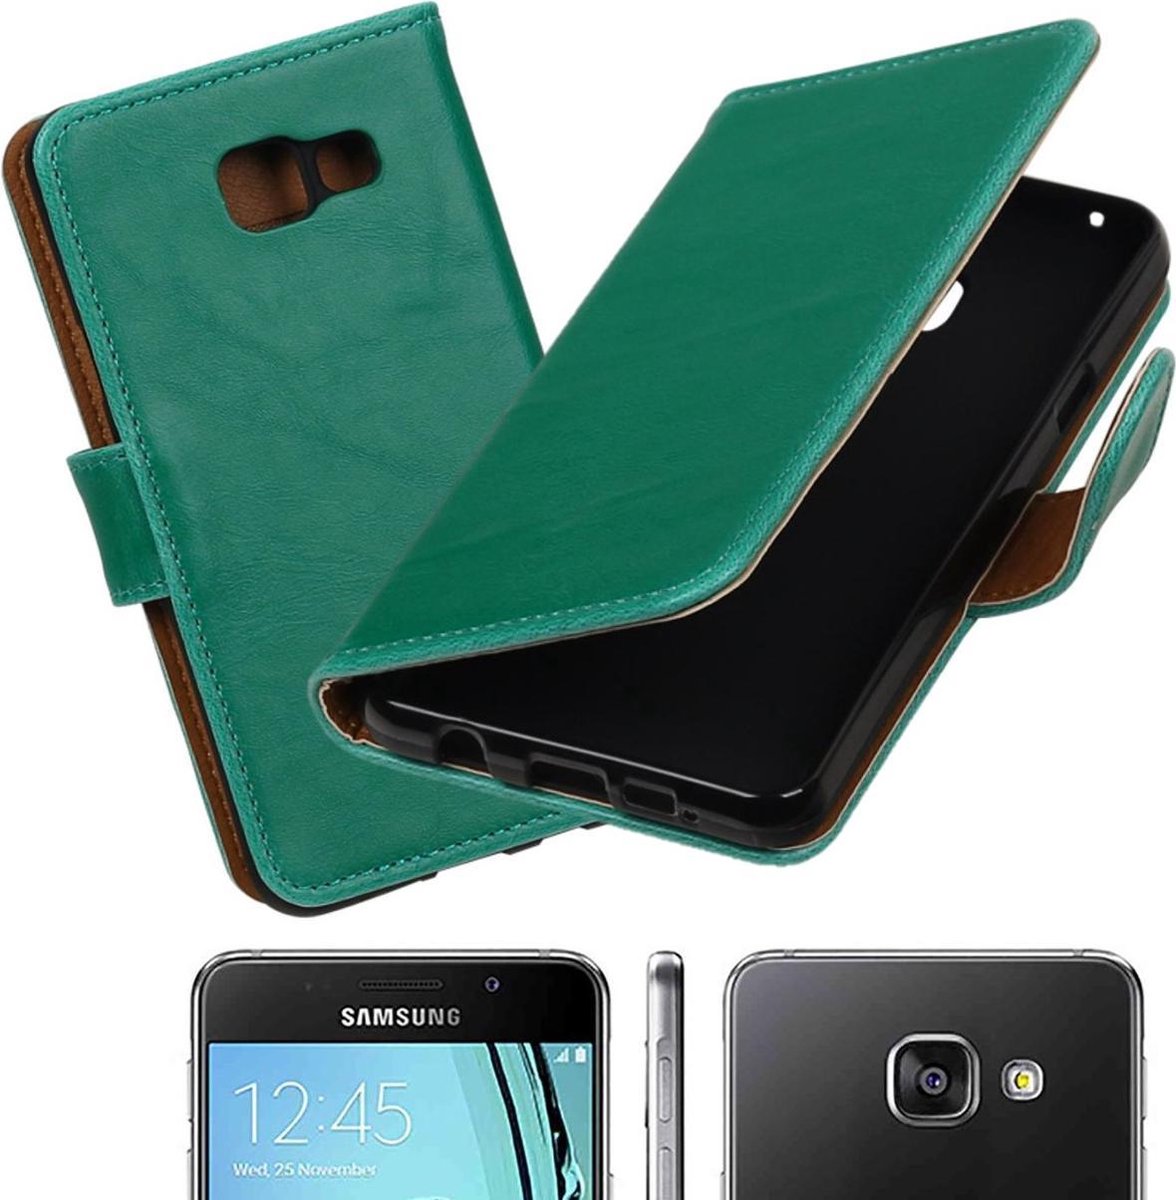 MP Case groen leder look hoesje voor Samsung Galaxy A3 2016 Booktype - Telefoonhoesje - smartphonehoesje - beschermhoes.